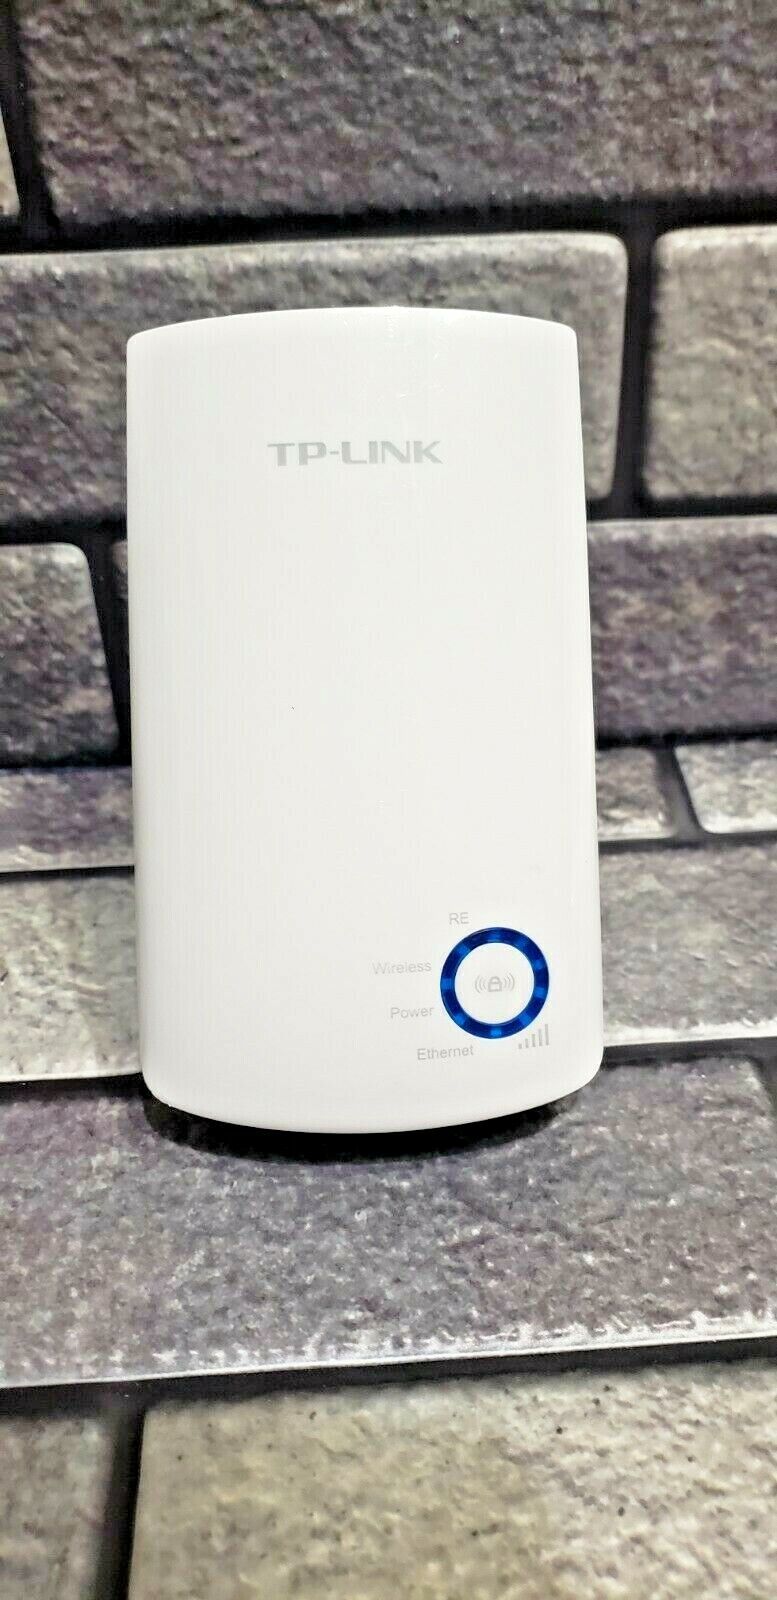 TP-Link TL-WA850RE N300 300Mbps Universal WiFi Range Extender